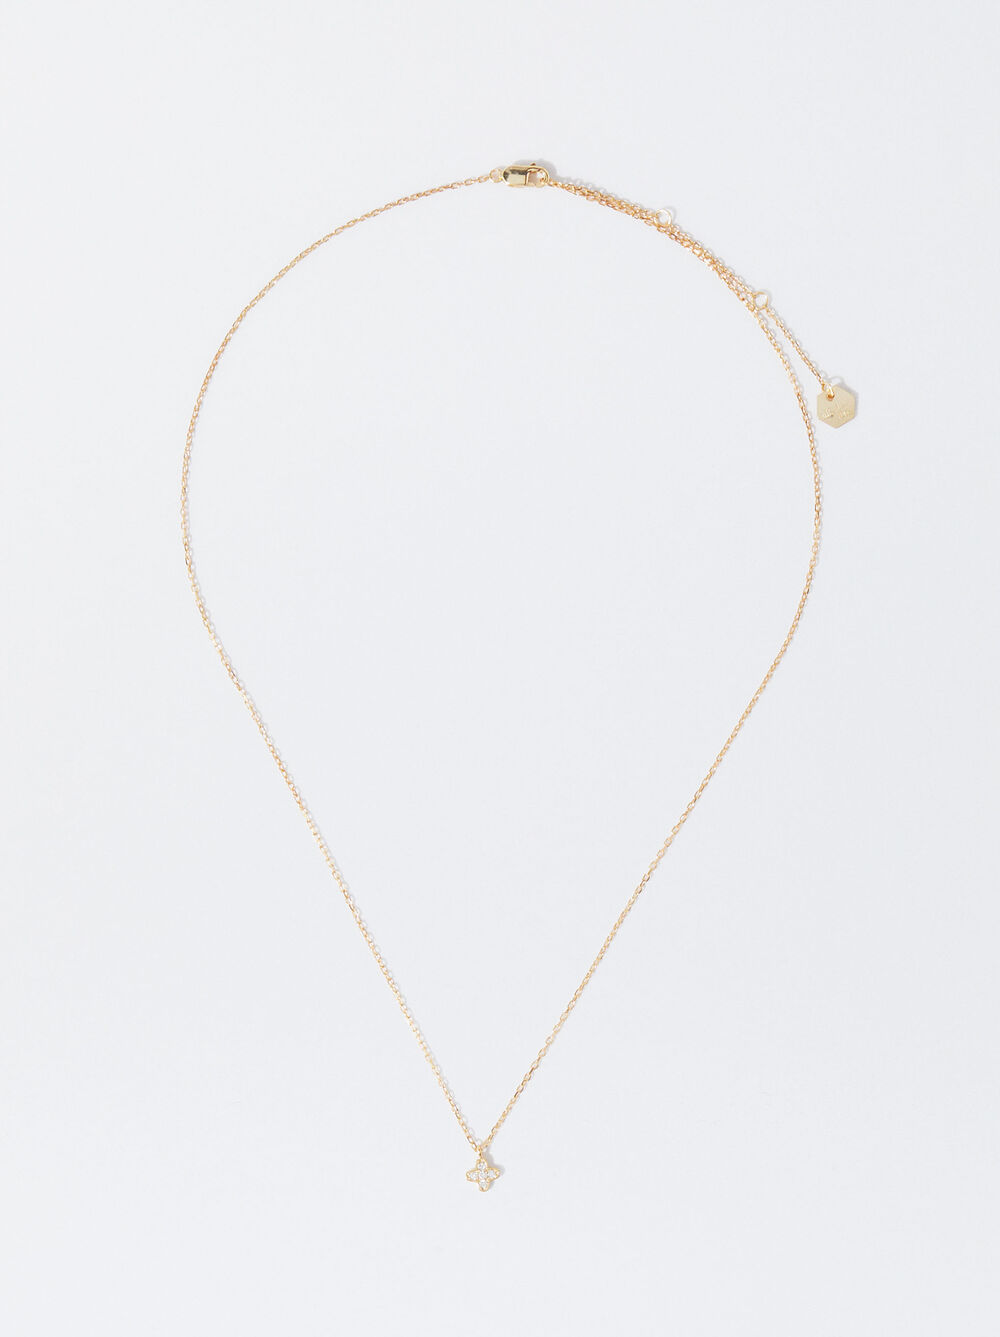 926 Silver Necklace With Zirconia